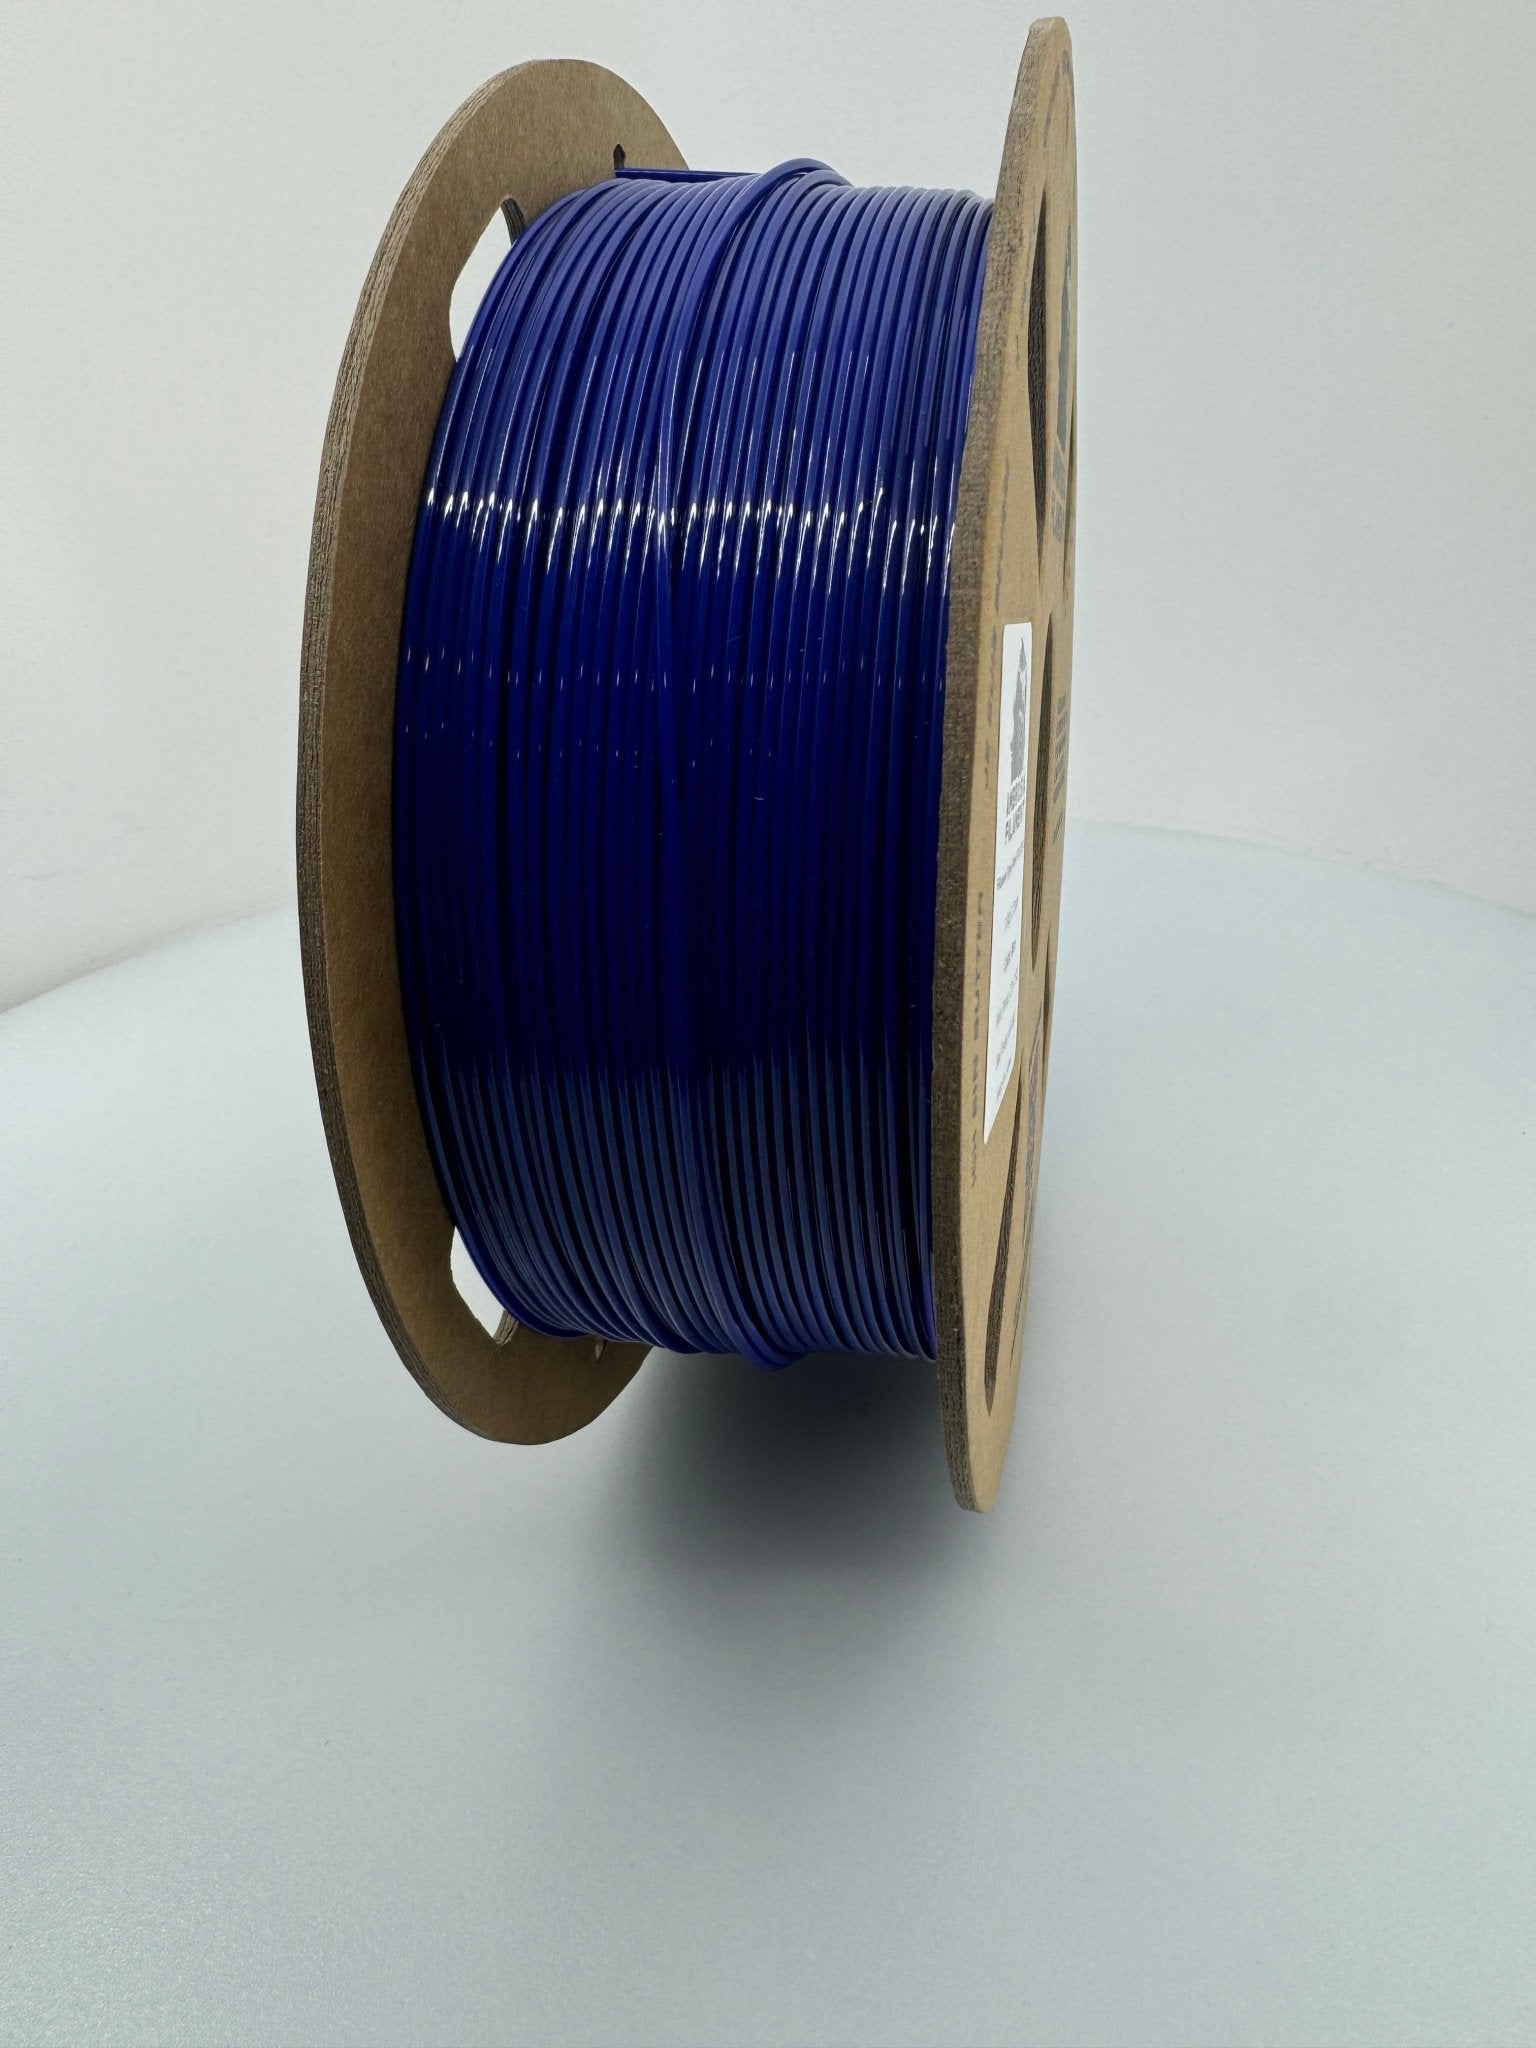 AMBROSIA PETG Filament of the Gods - 1KG Bambu AMS Friendly Cardboard Spools Premium 3D Printing Filament - West3D 3D Printing Supplies - AMBROSIA FILAMENT